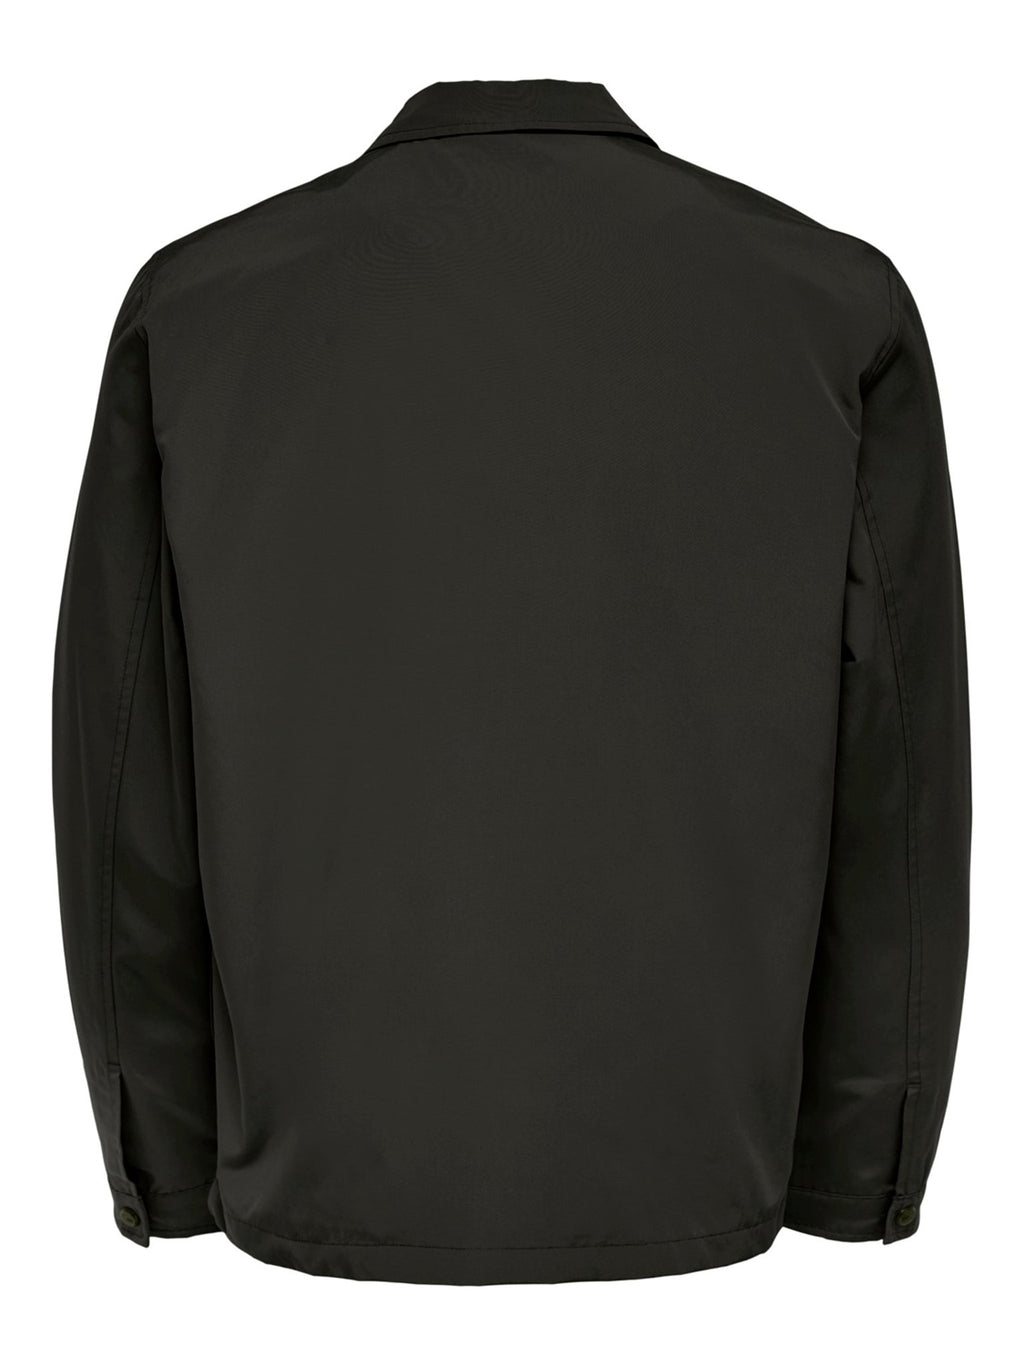 Jayden zipper jacket - Peat